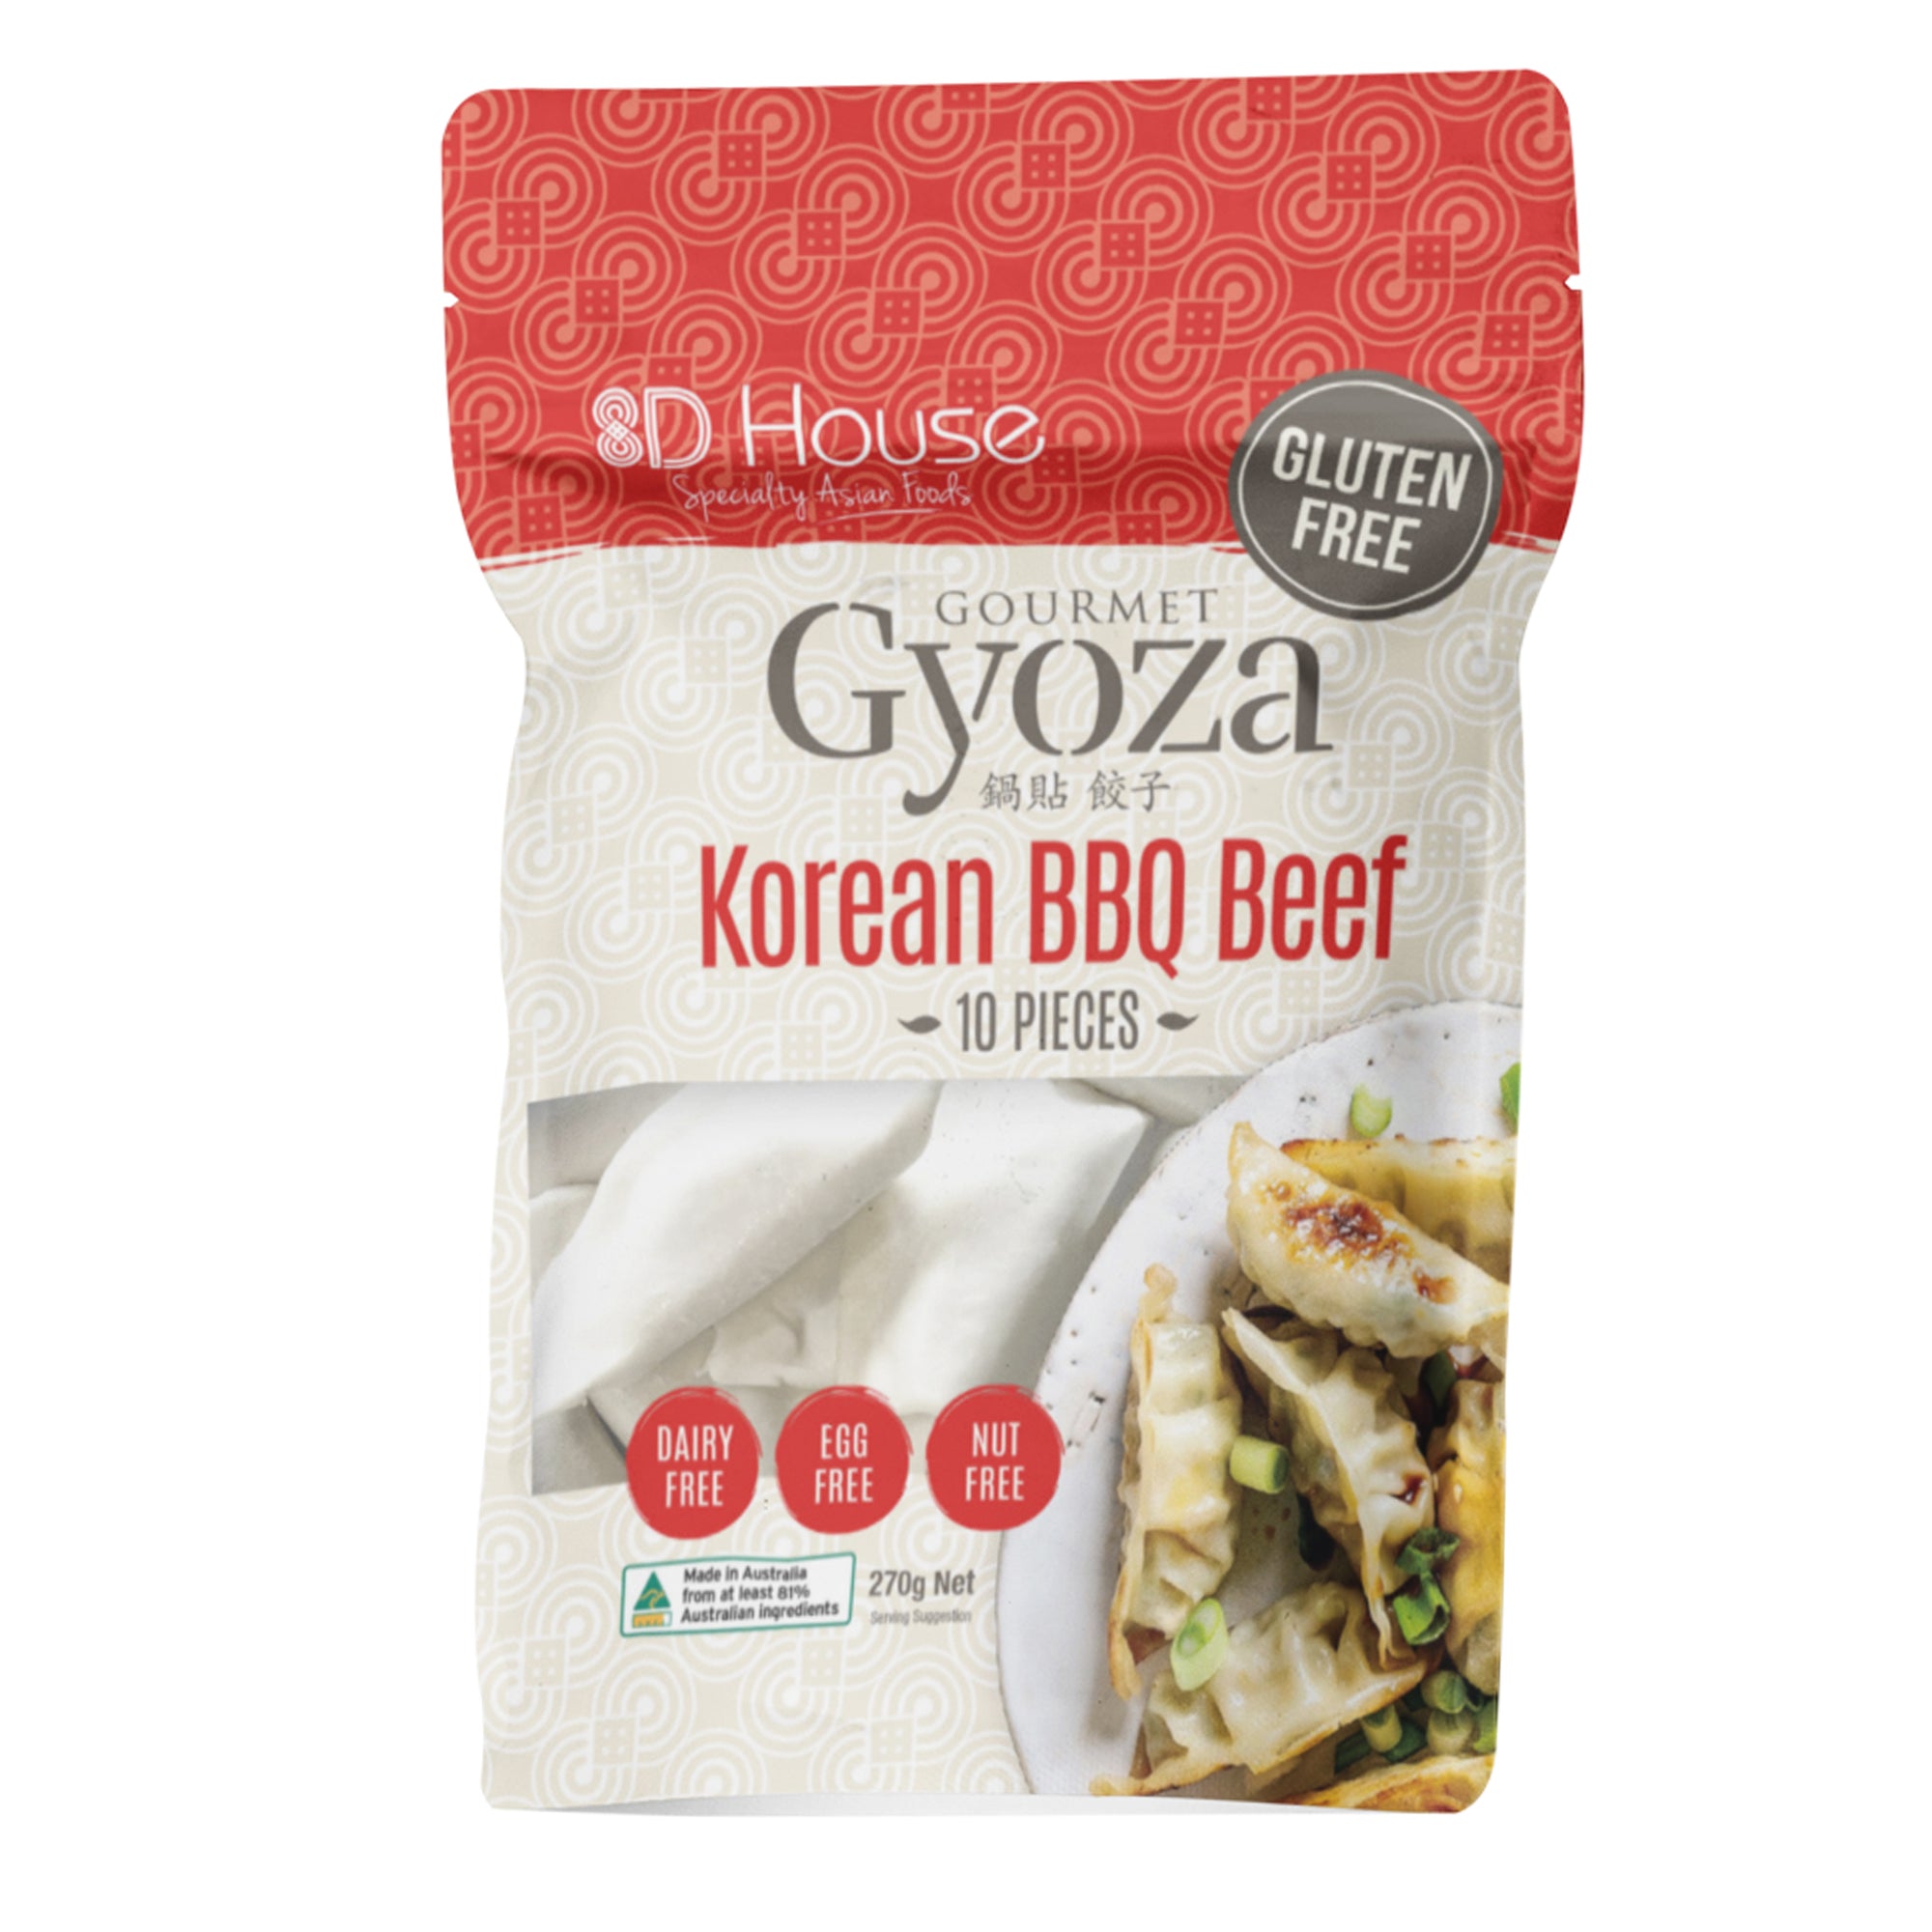 Gourmet Gyozas Korean BBQ Beef 10